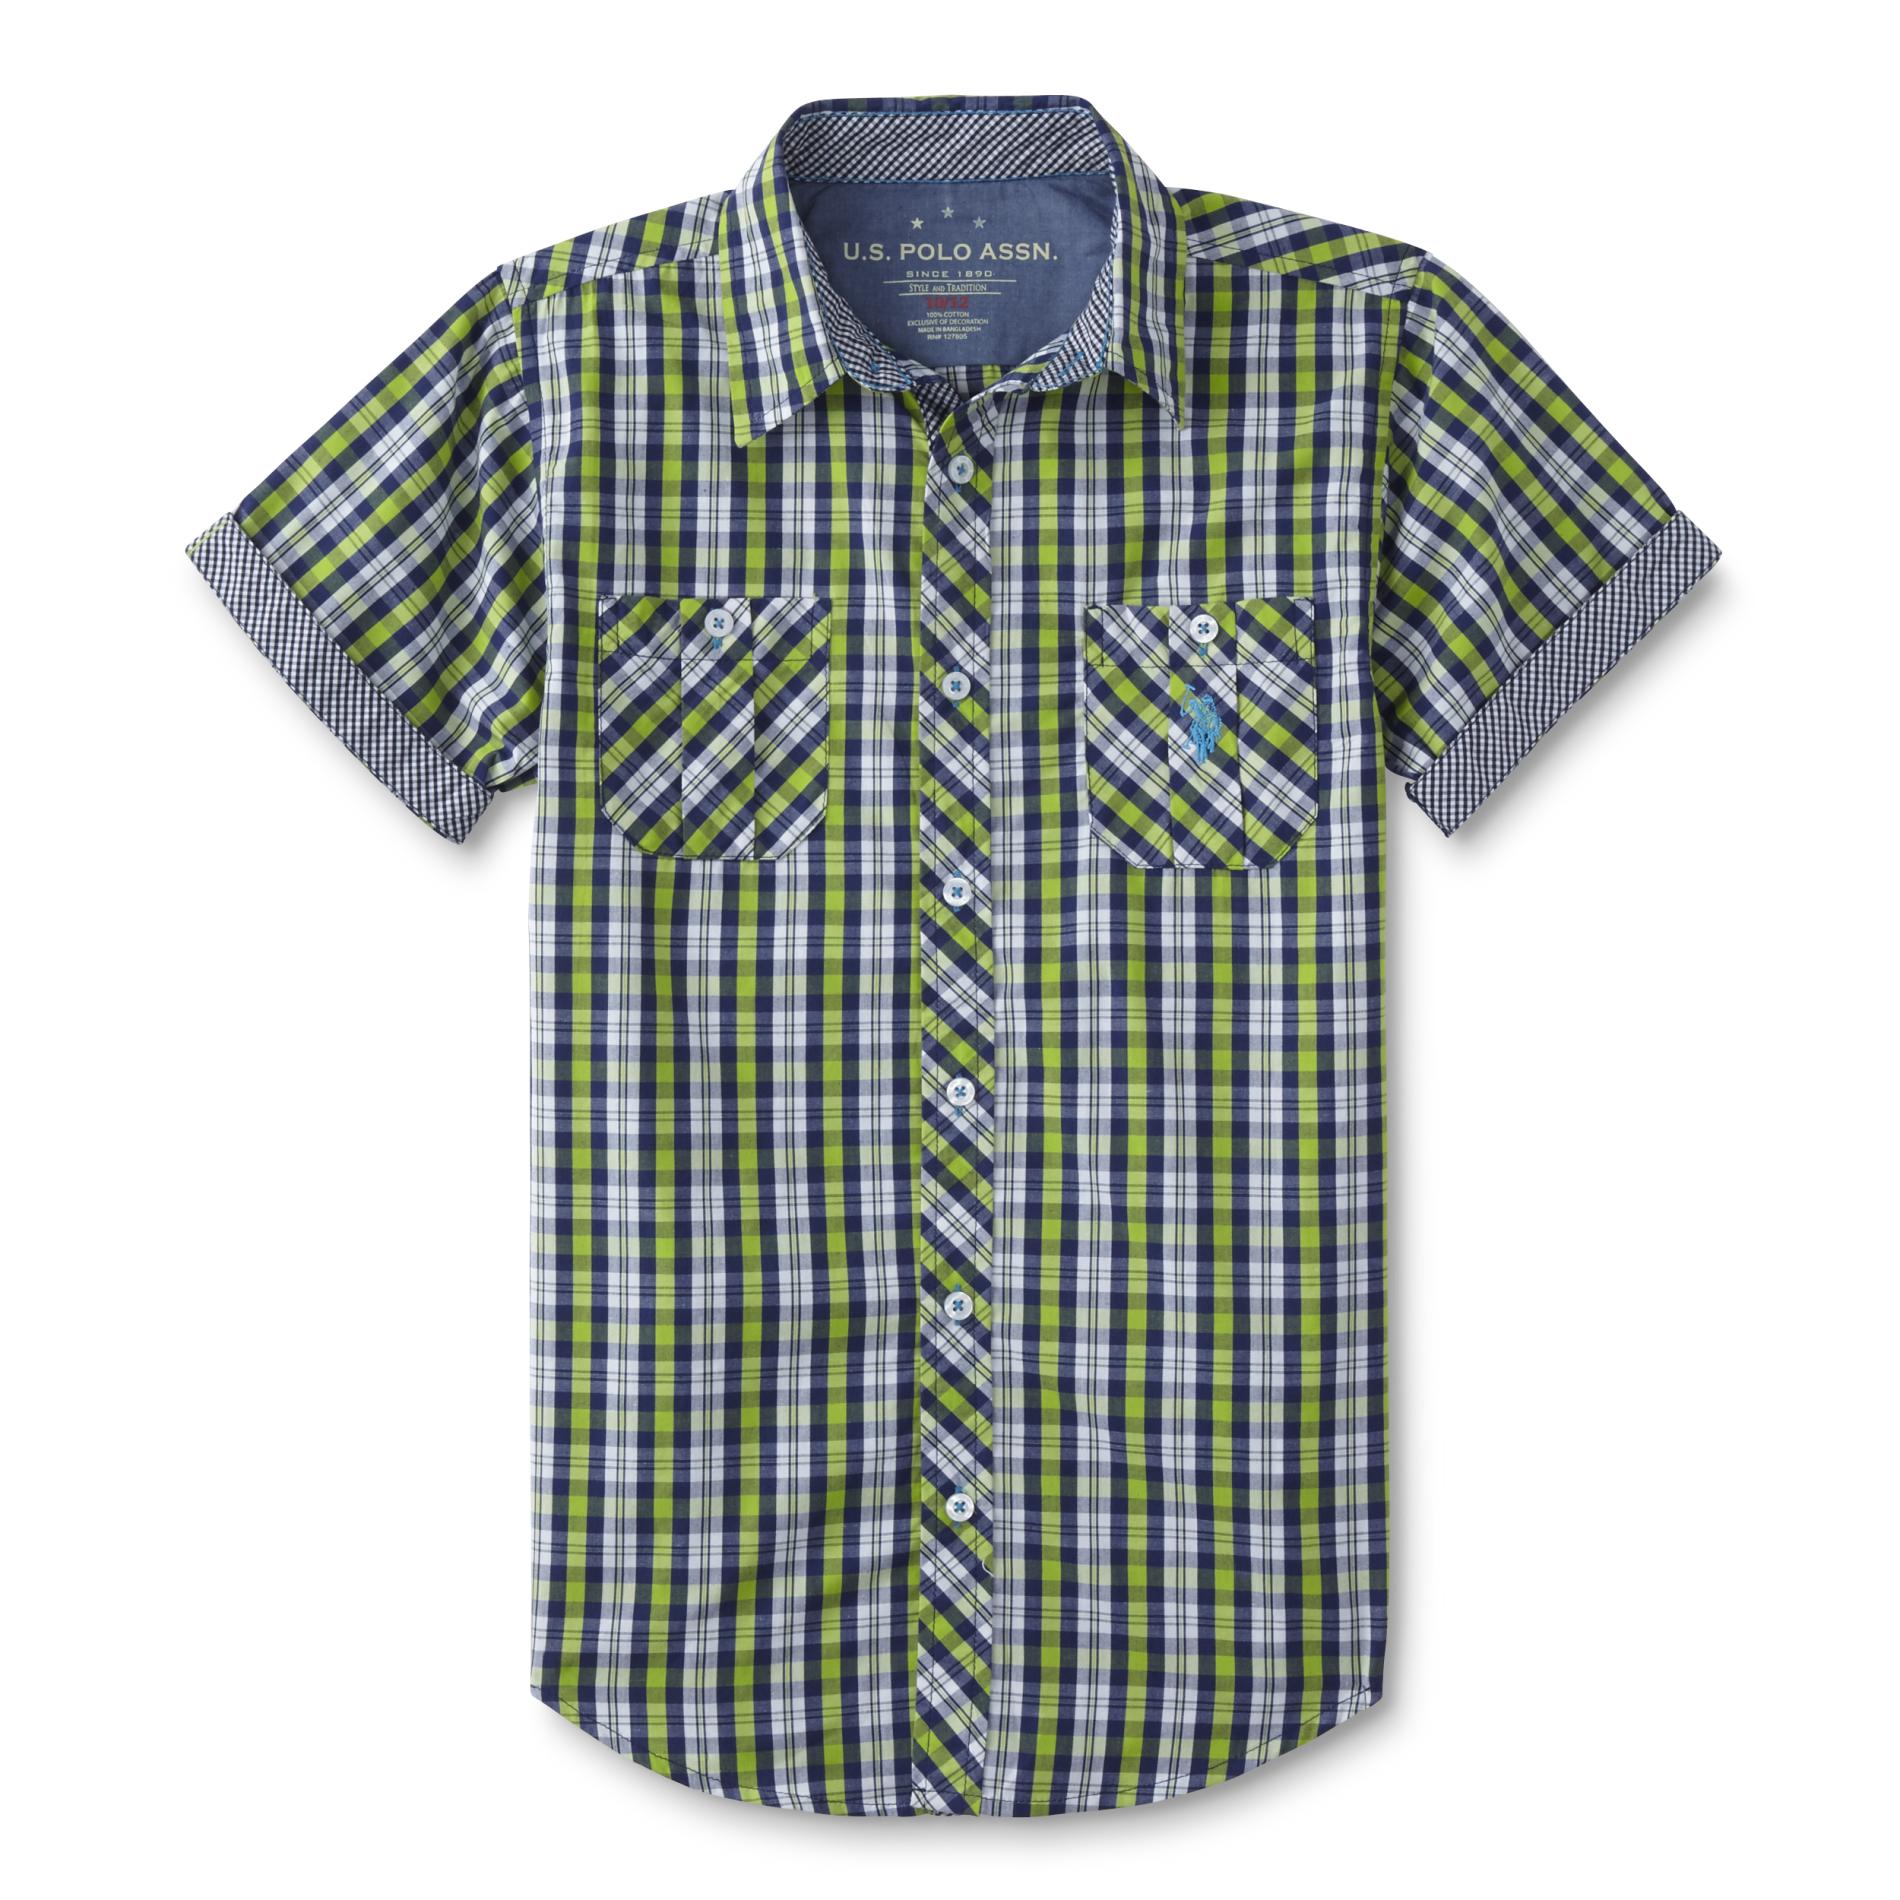 U.S. Polo Assn. Boys' Button-Front Shirt - Plaid